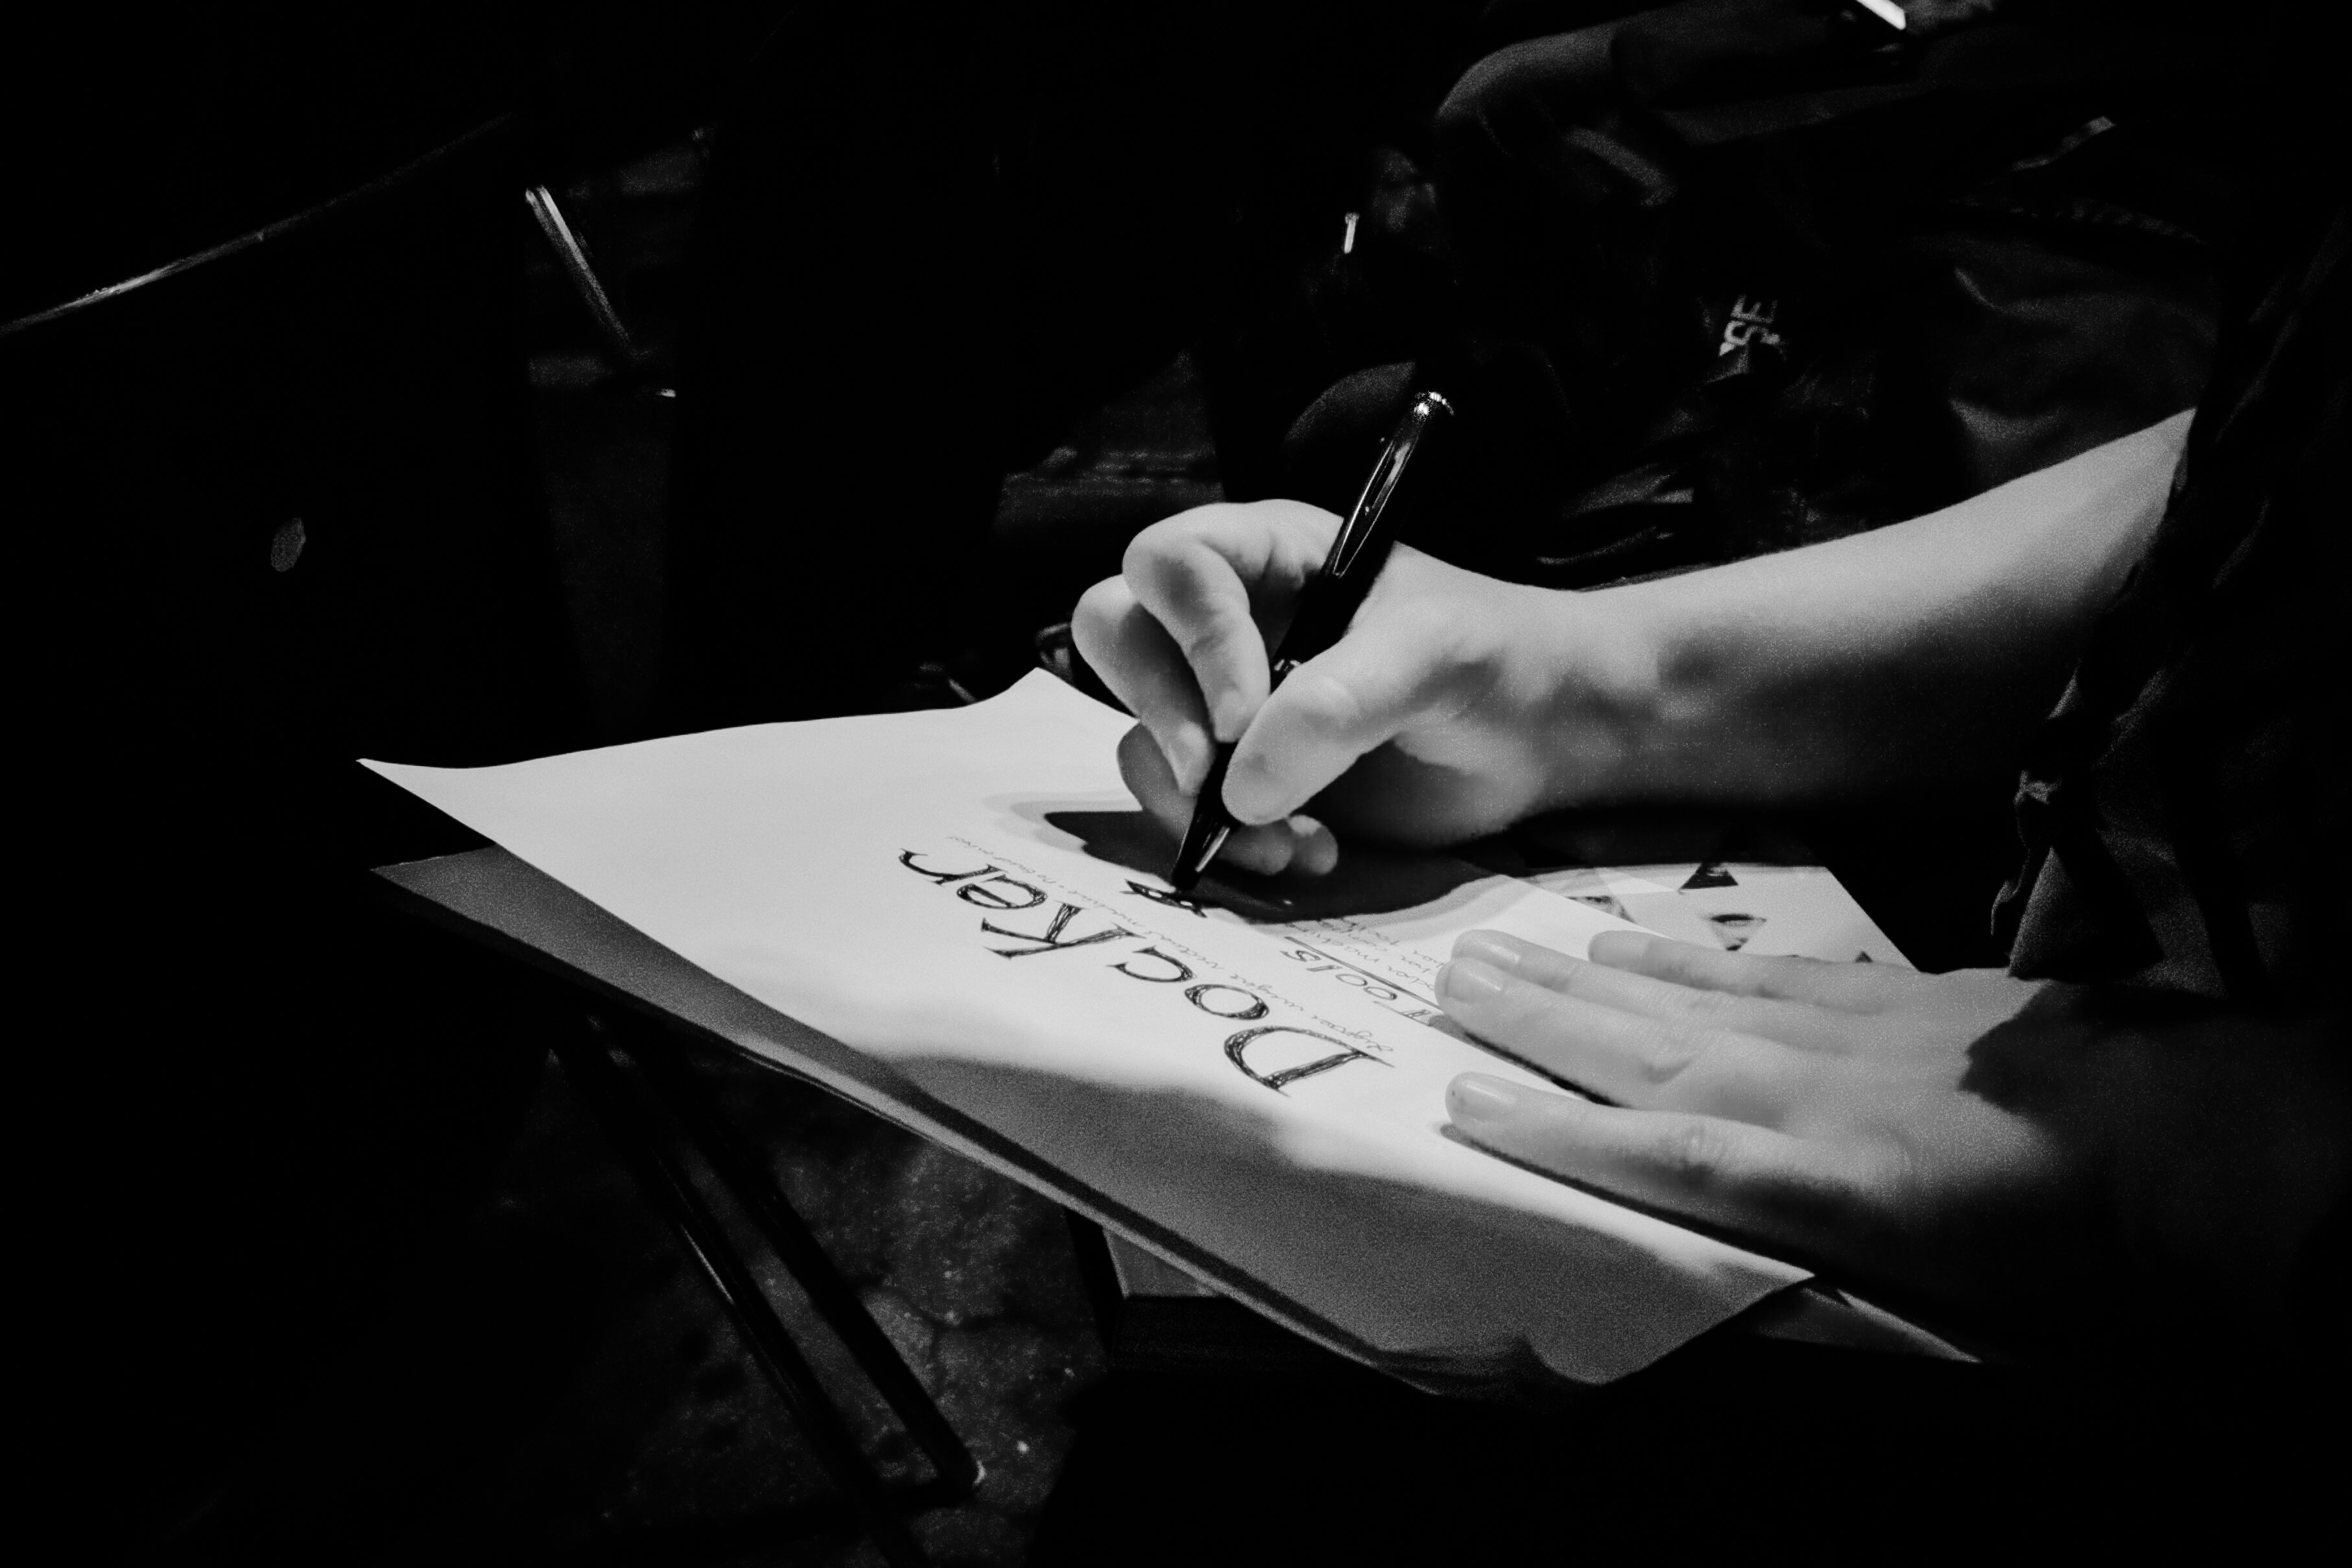 Corey Leigh Latislaw creating a sketch note